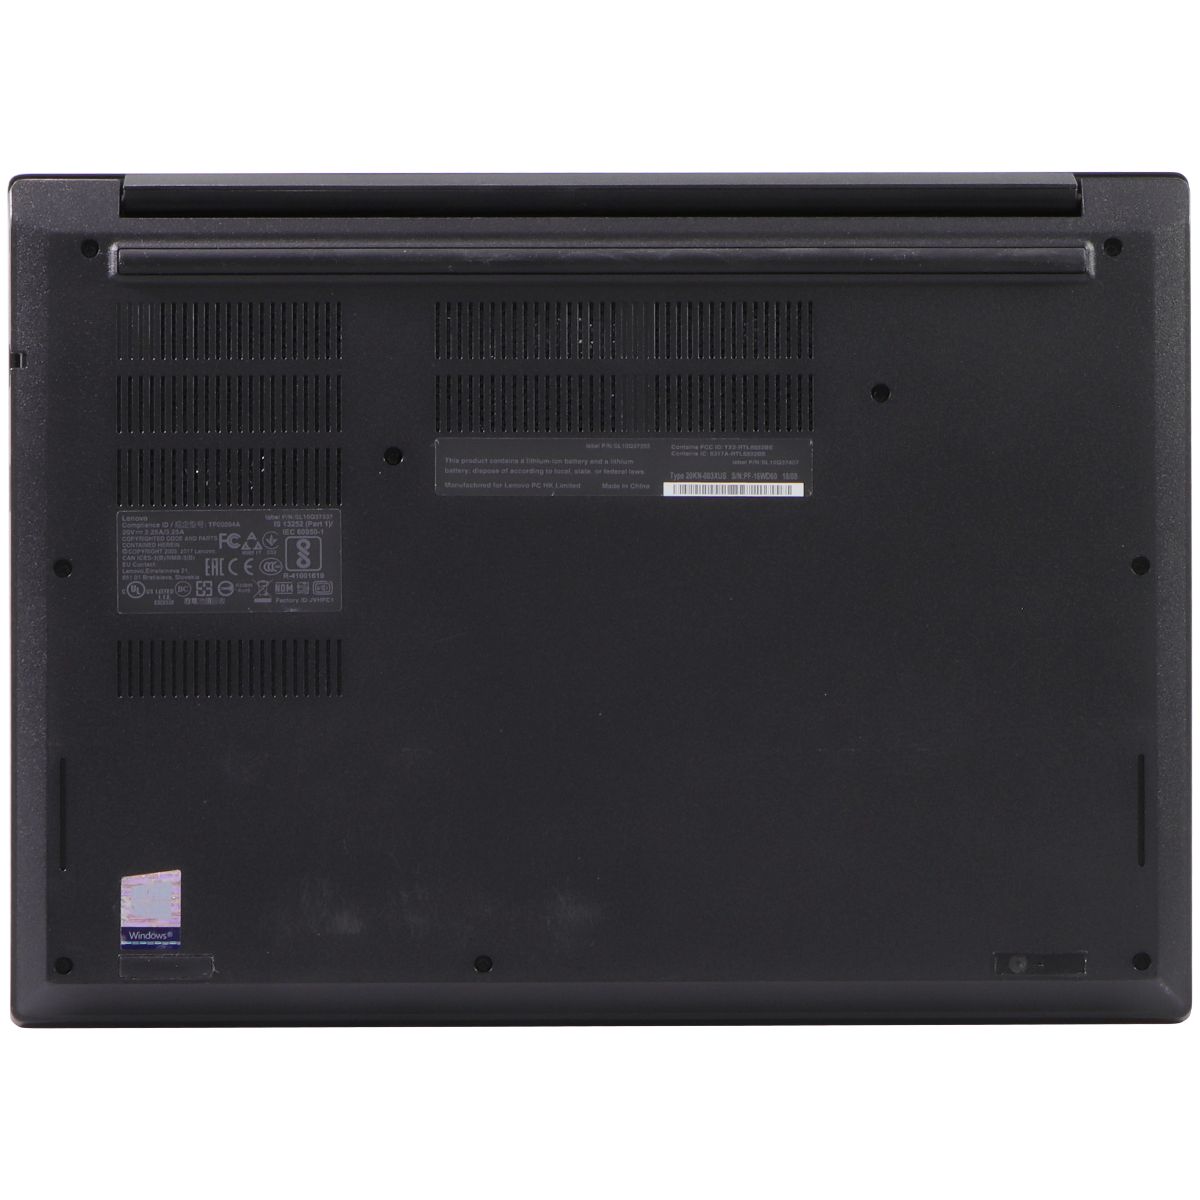 Lenovo ThinkPad E480 (14-in) Laptop (20KN-003XUS) i5-8250U/500GB HDD/4GB/10 Home Laptops - PC Laptops & Netbooks Lenovo    - Simple Cell Bulk Wholesale Pricing - USA Seller